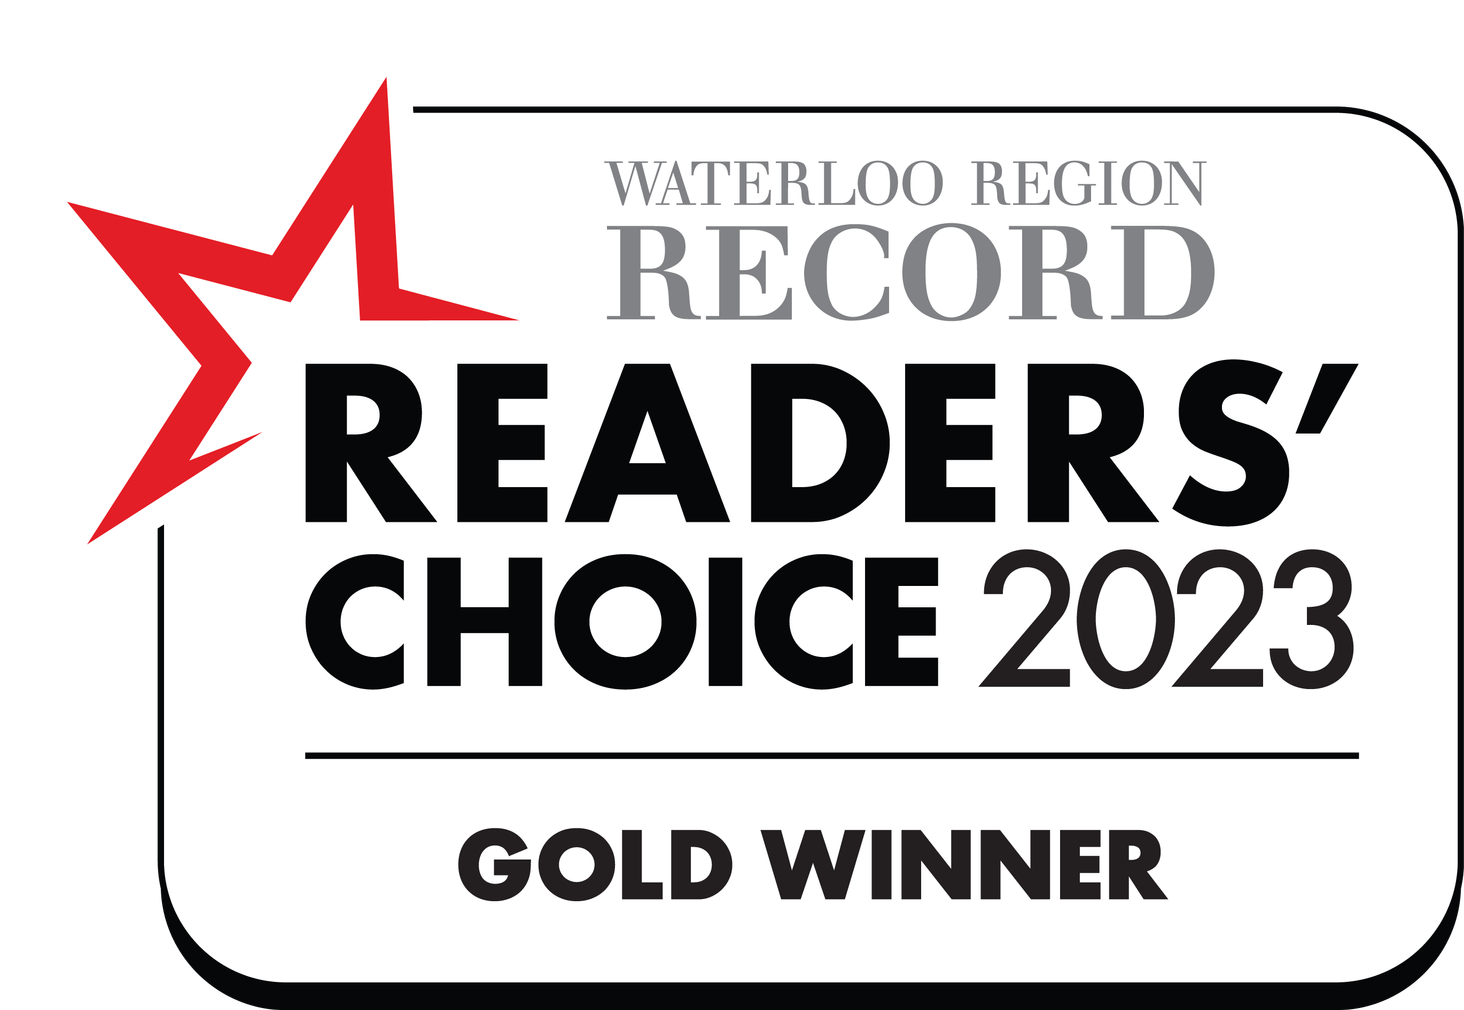 The waterloo region record readers ' choice 2023 gold winner logo.